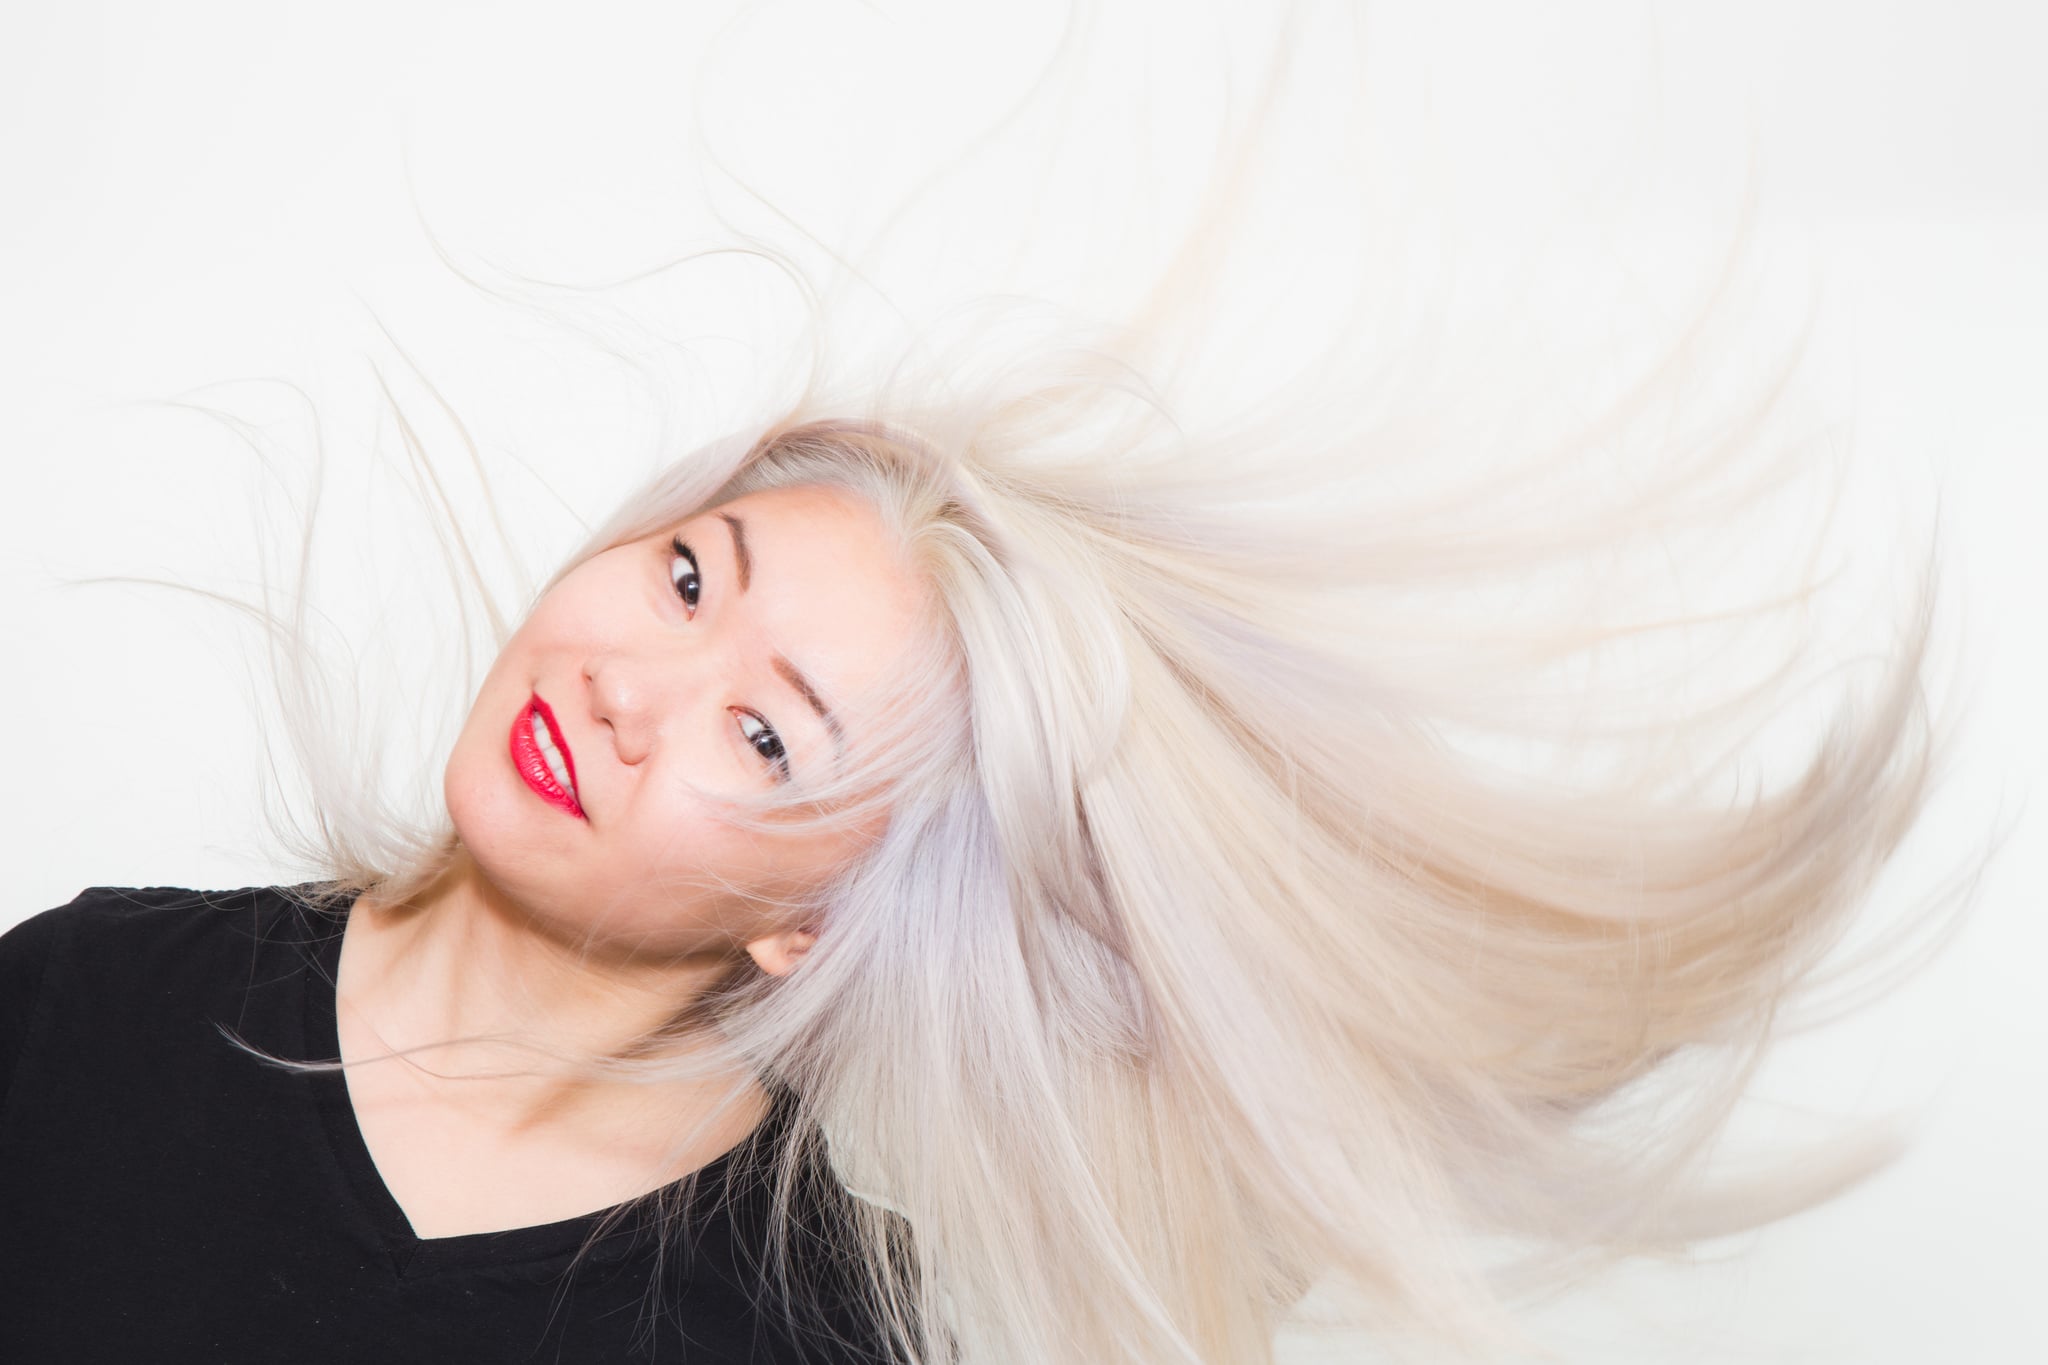 How to Dye Asian Hair Blond | POPSUGAR Beauty